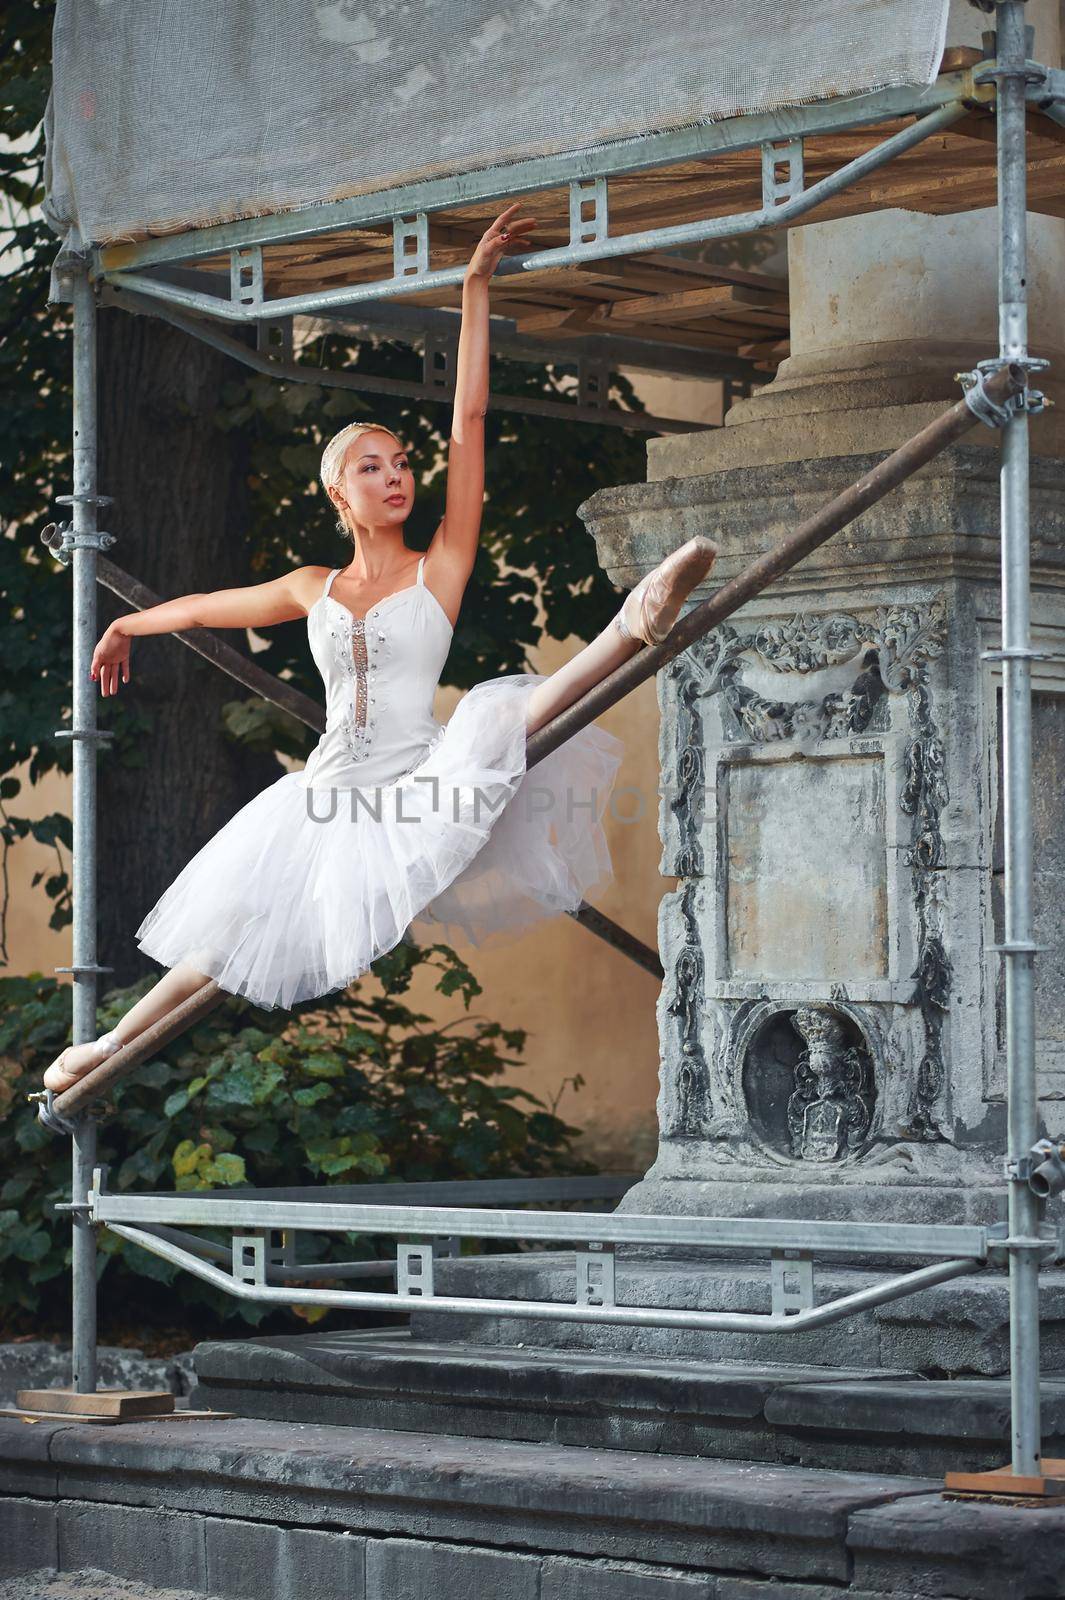 Ballerina dancing near building under construction by SerhiiBobyk